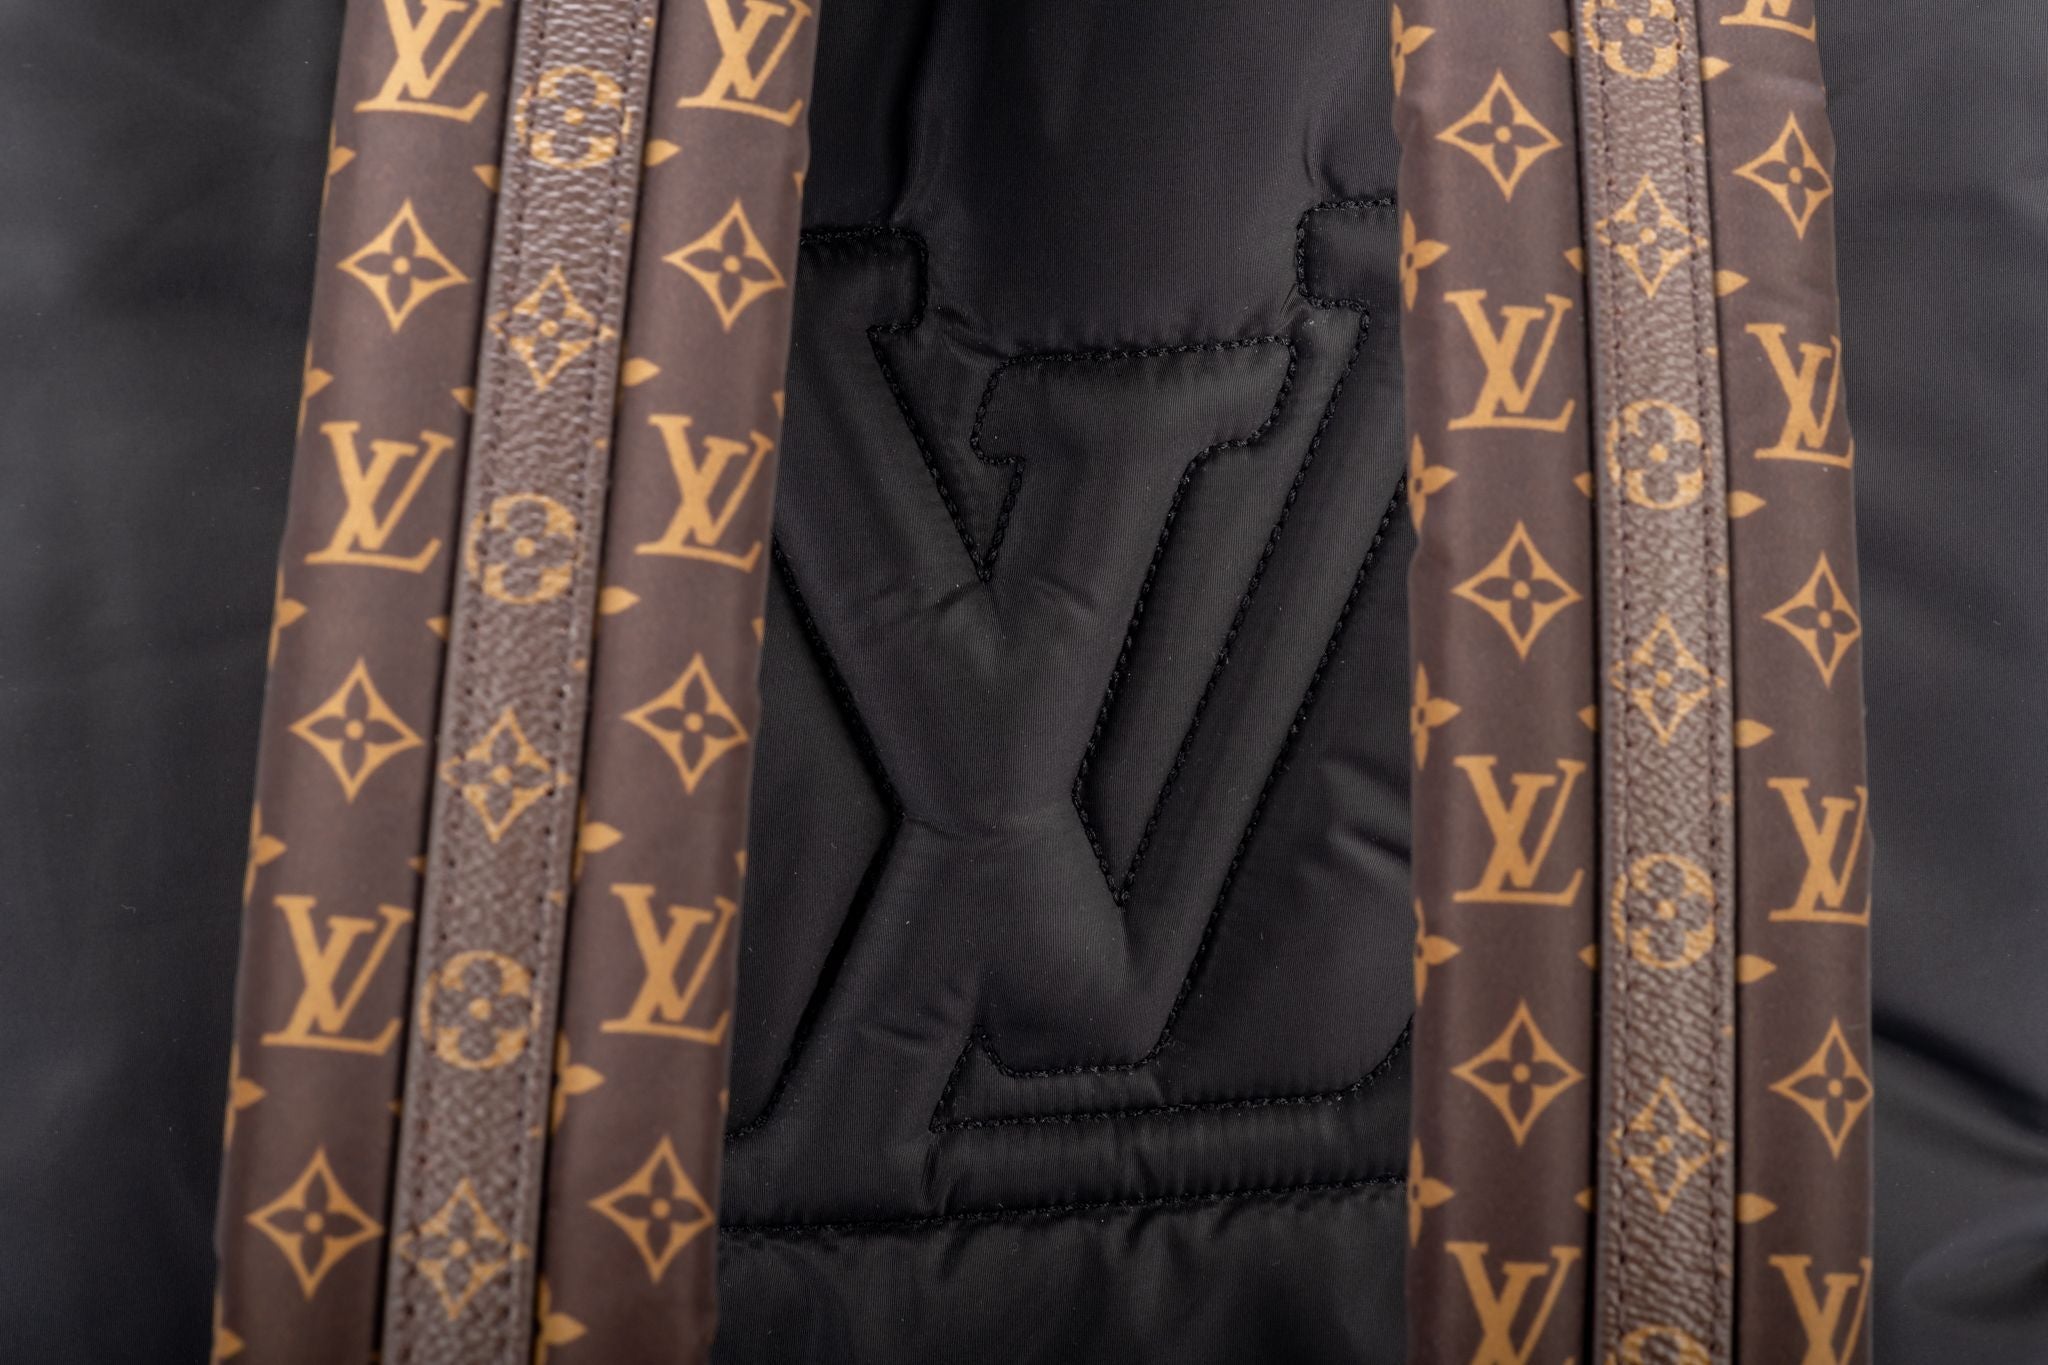 Louis Vuitton Monogram Backpack